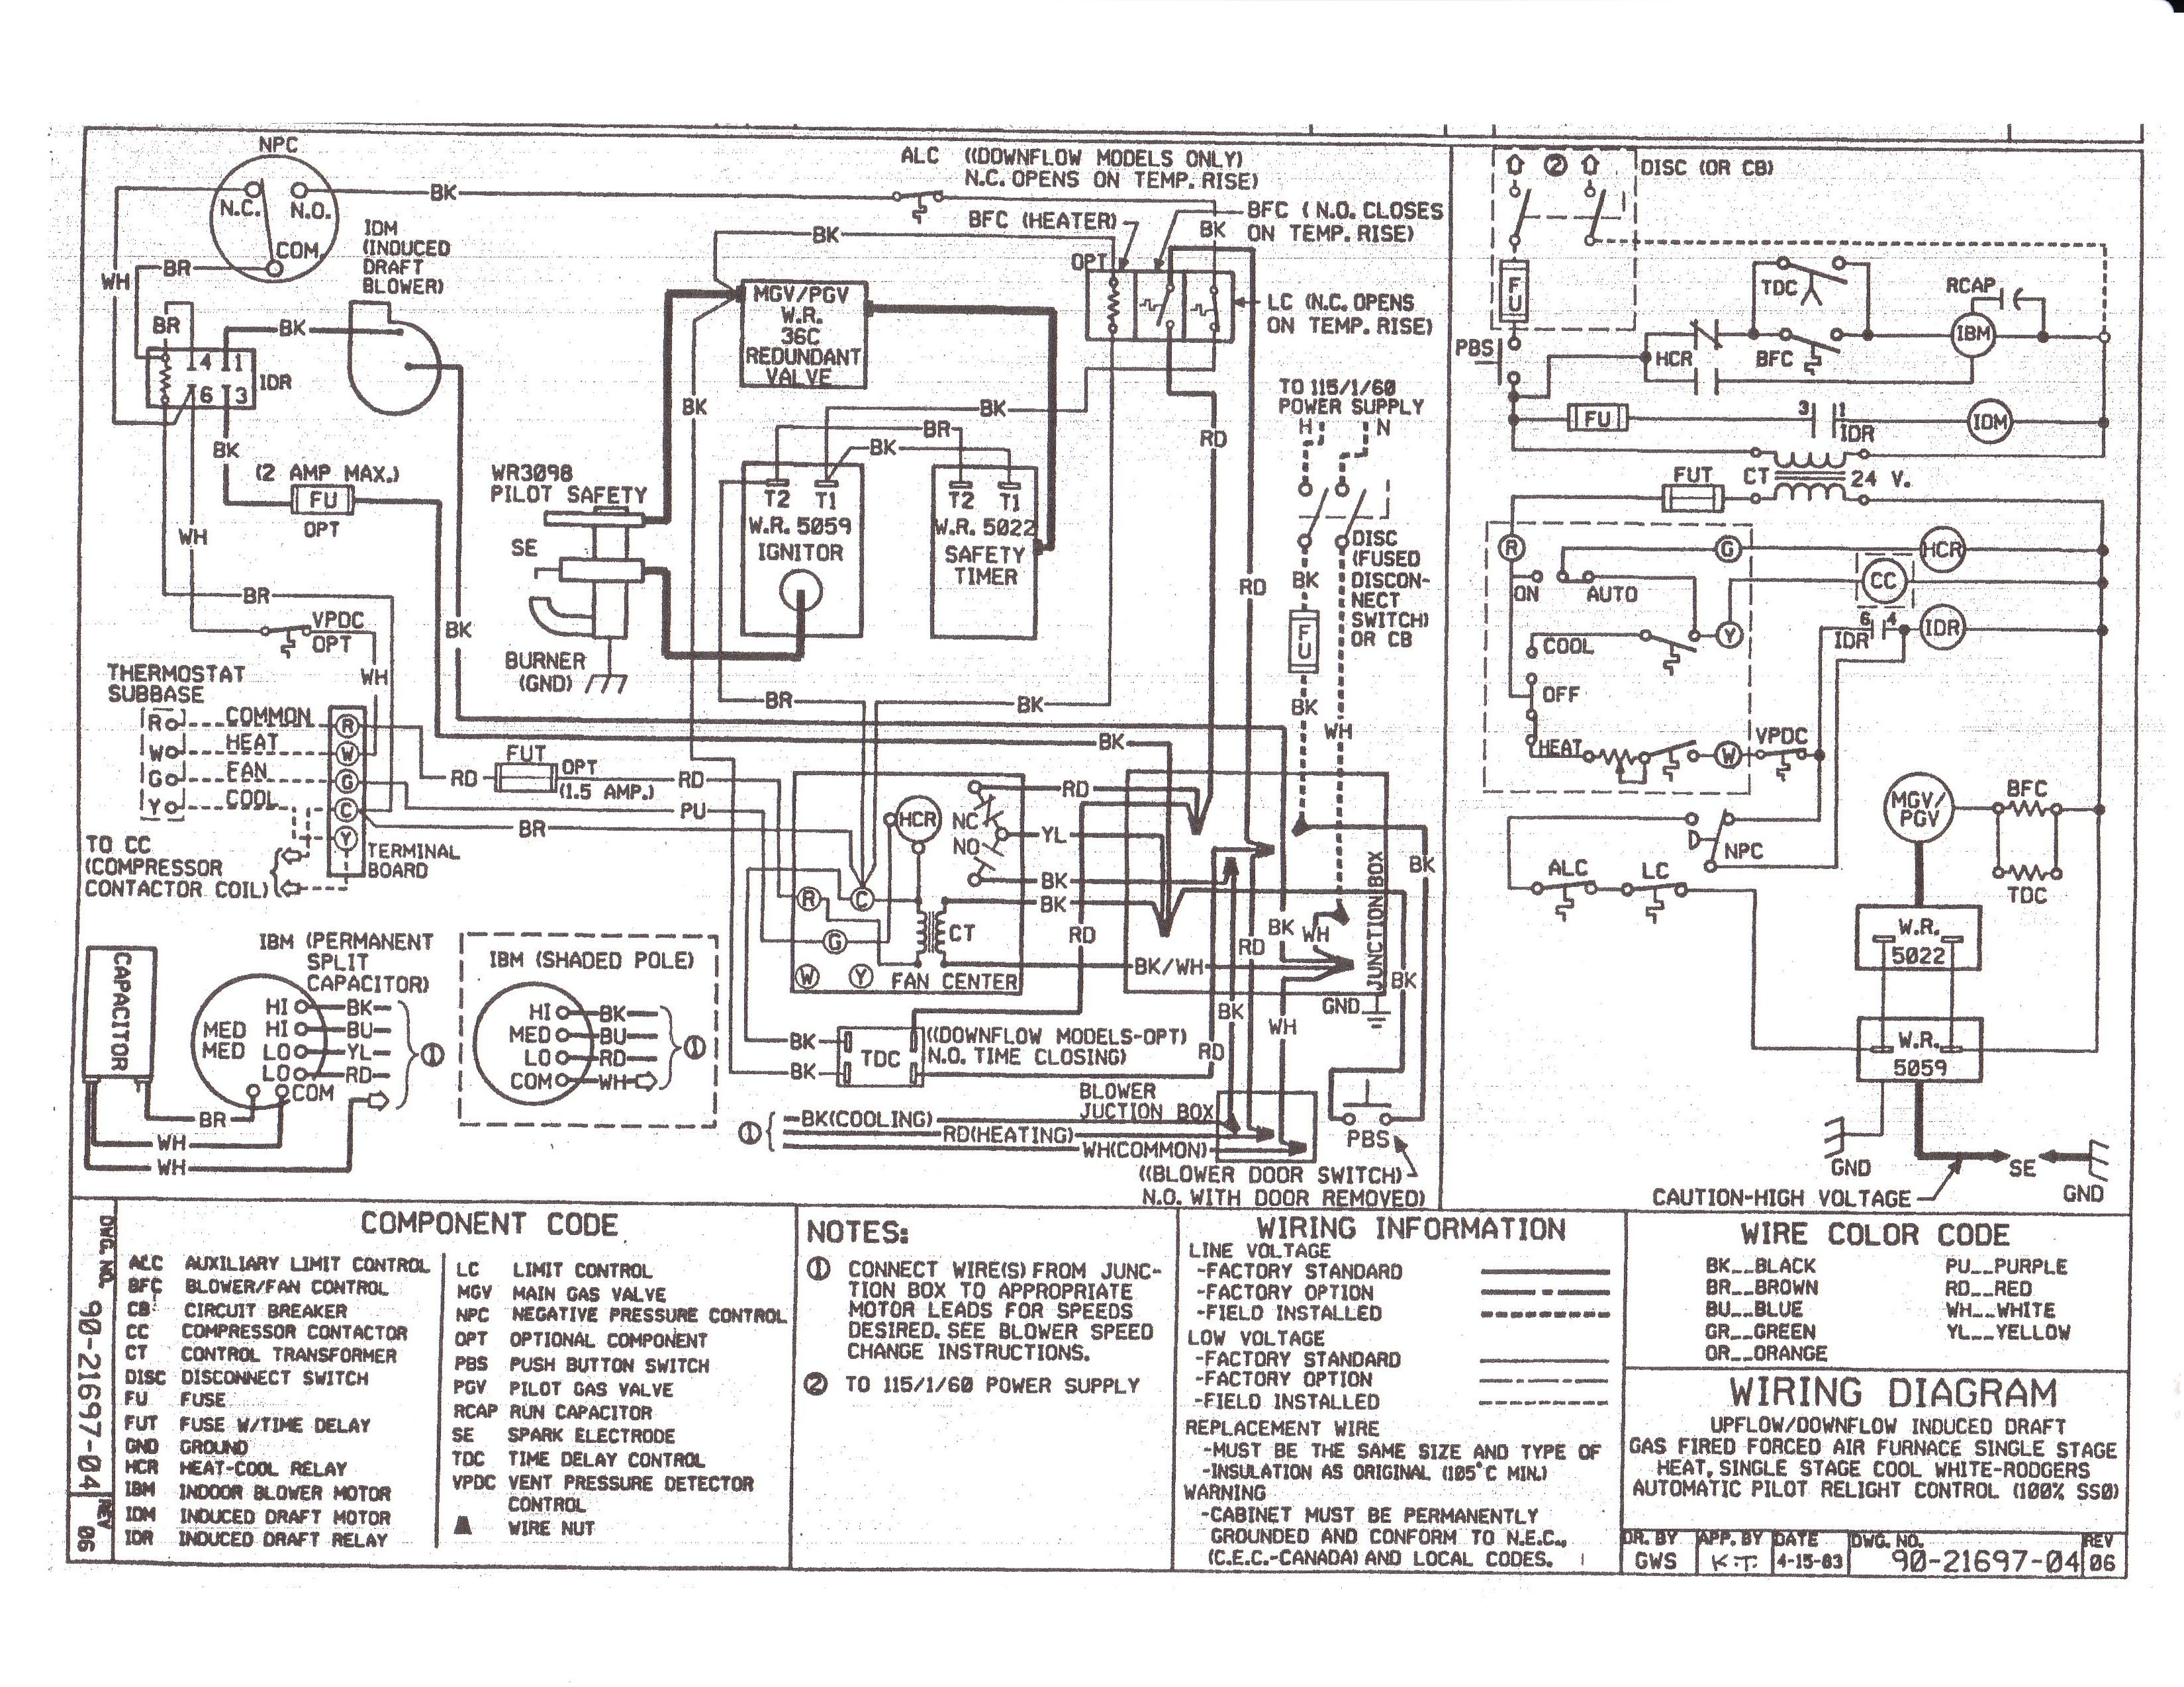 Bryant Heat Pump Wiring Diagram Rheem Heat Pump Wiring Diagram List Heat Pump Wiring Diagram Of Bryant Heat Pump Wiring Diagram